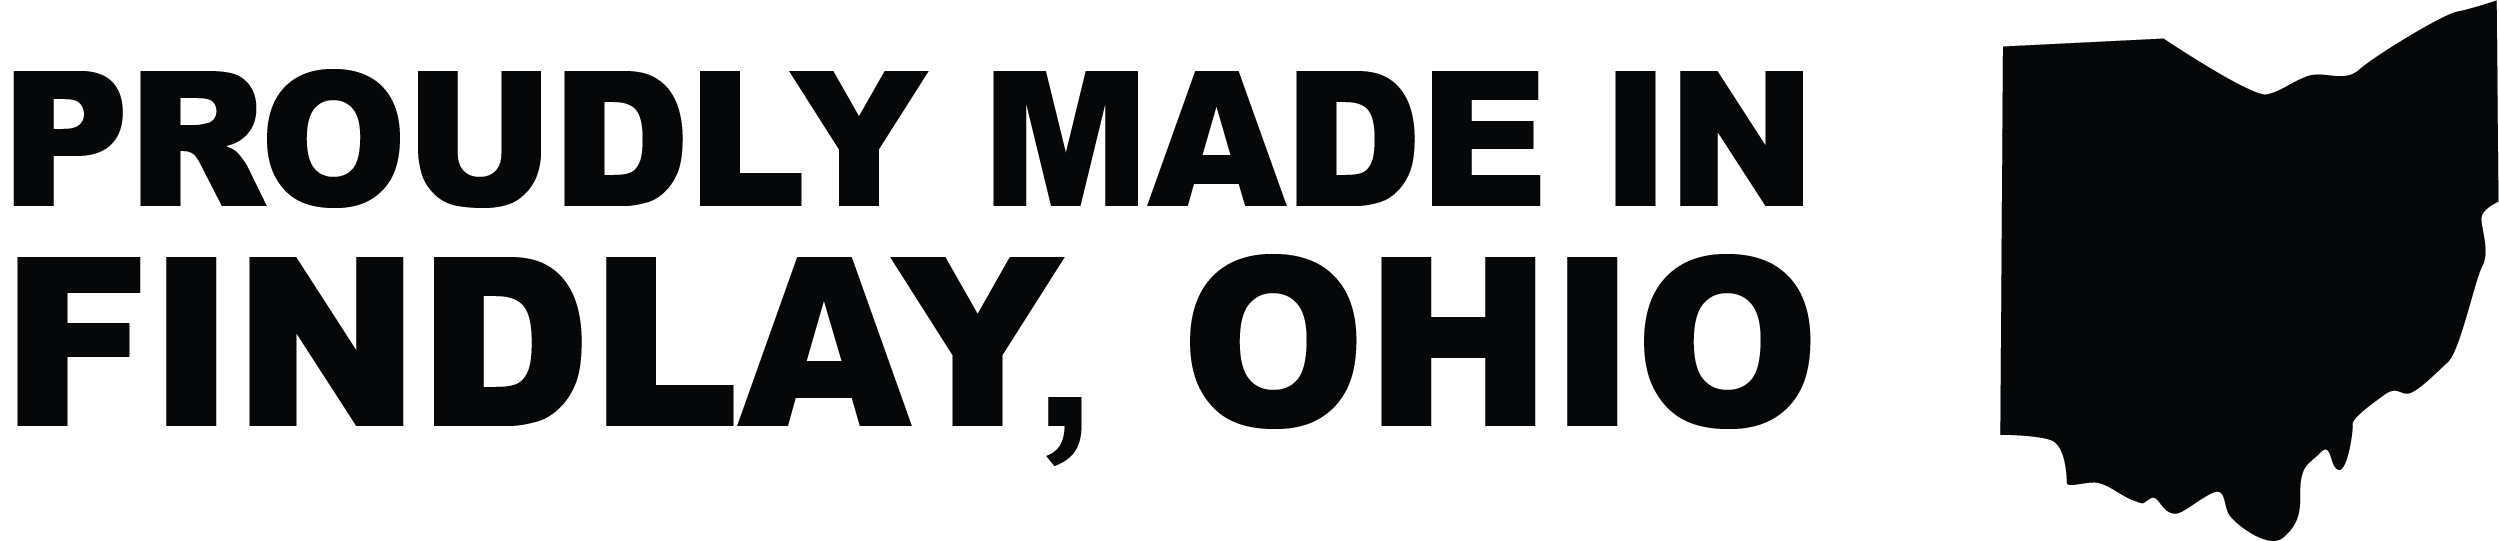 Made in Findlay Ohio logo